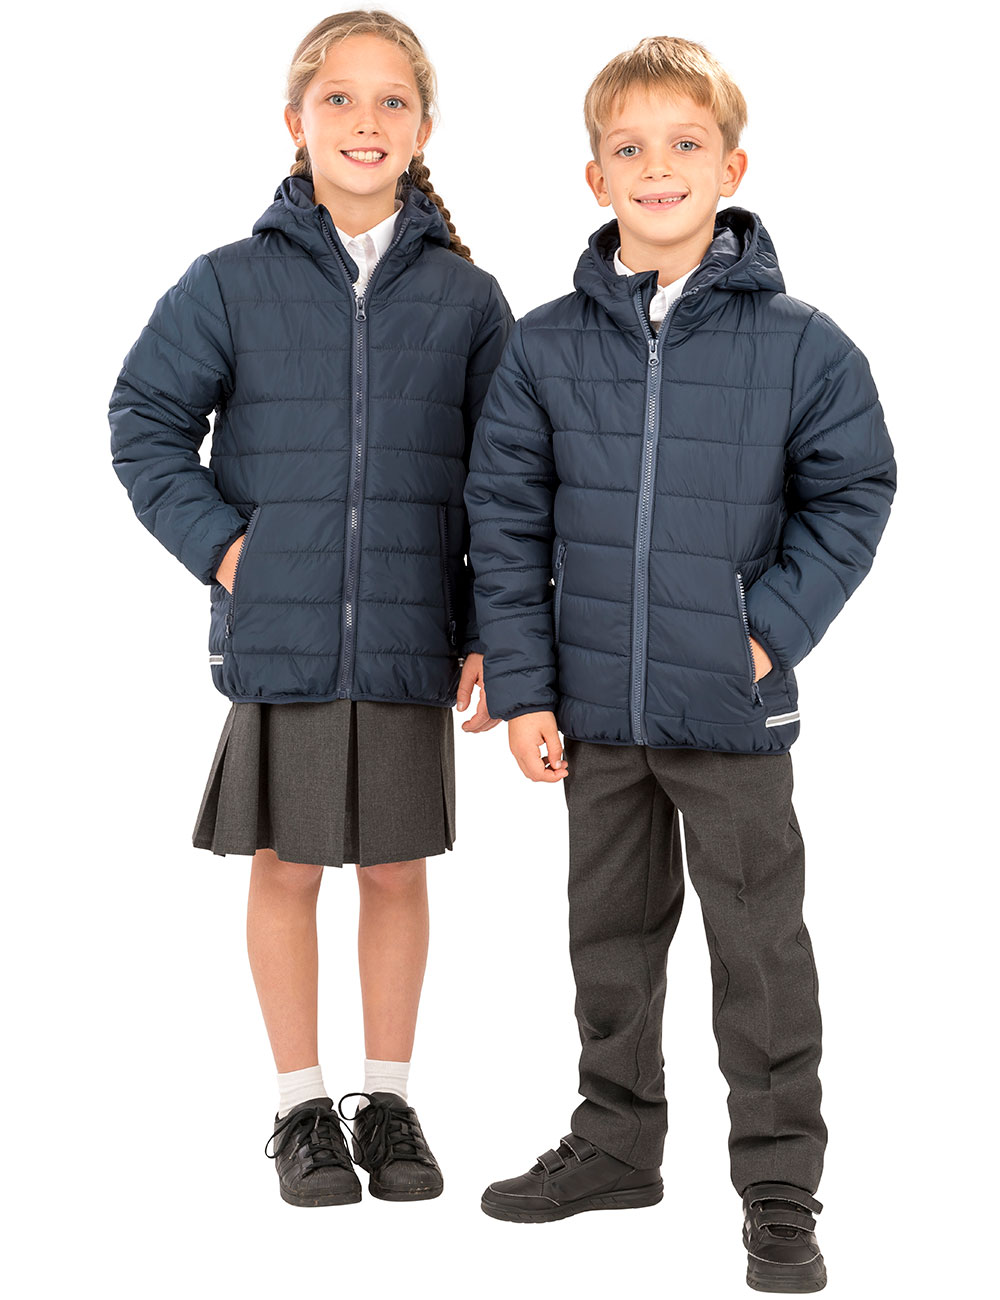 Boy and girl in blue school jacket